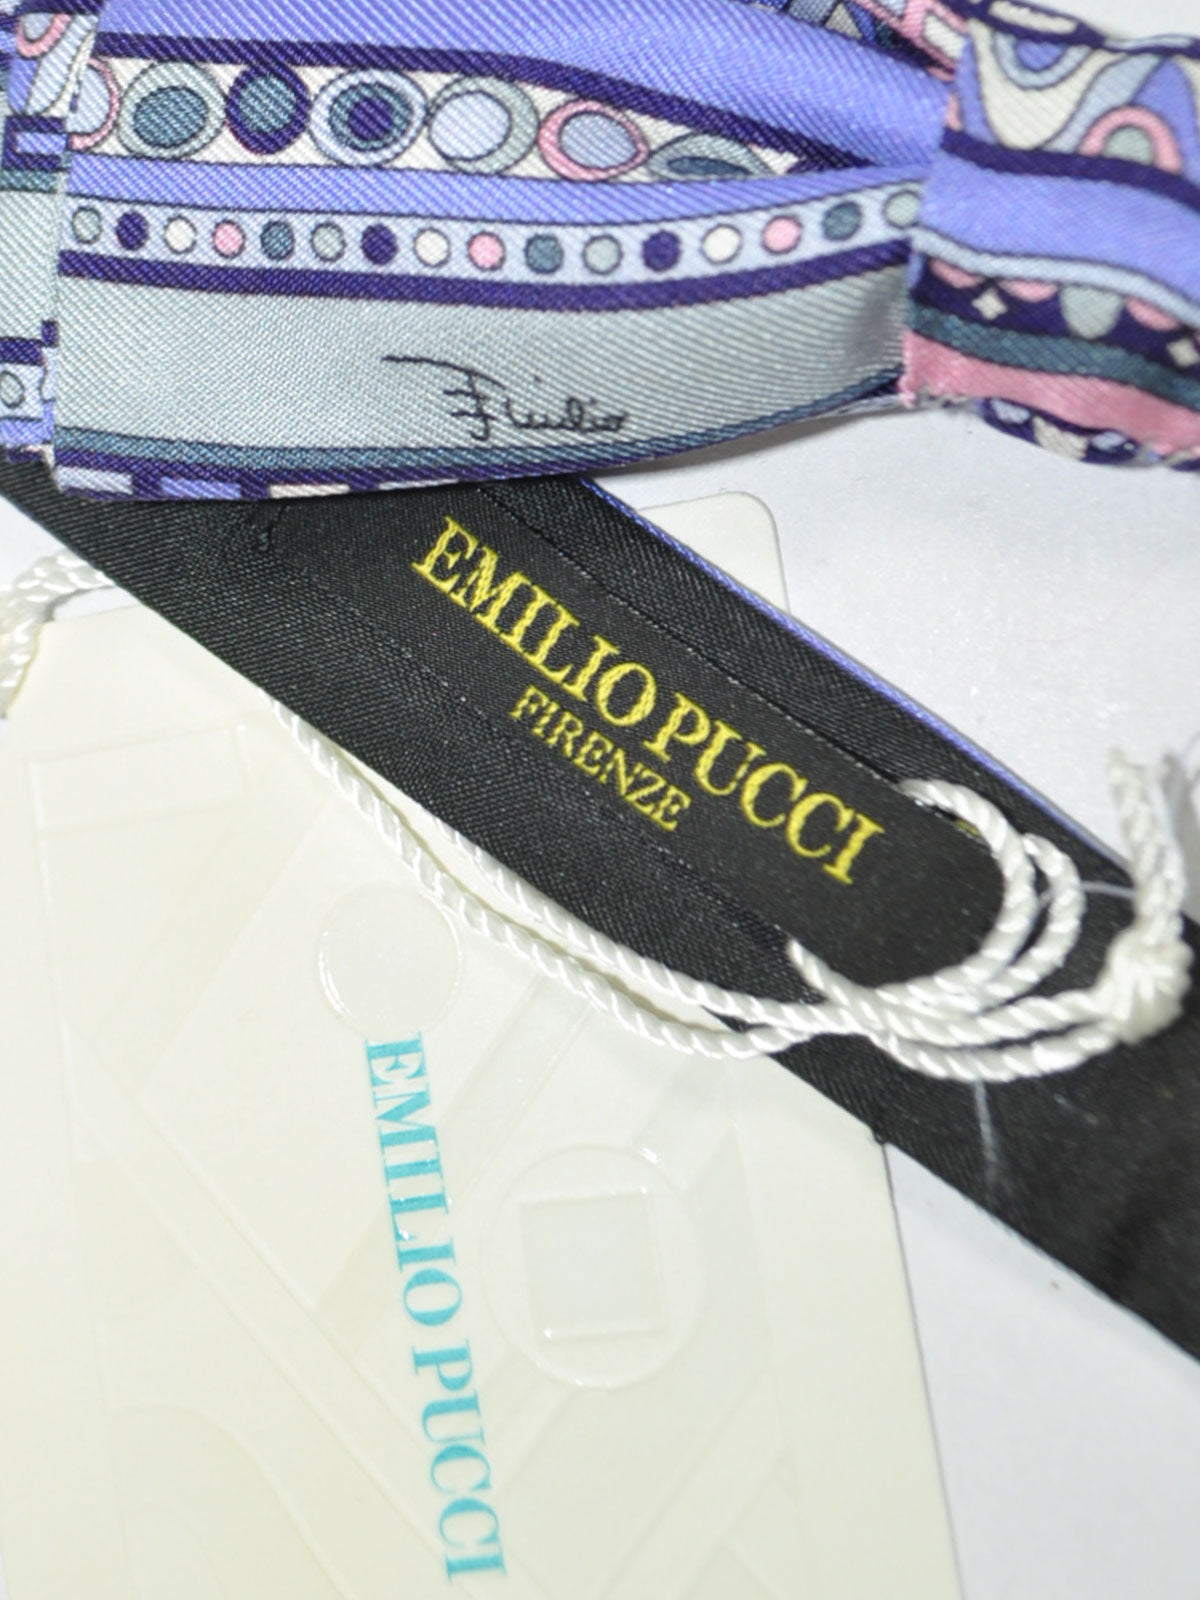 Emilio Pucci Bow Tie Lilac Pink Gray Design